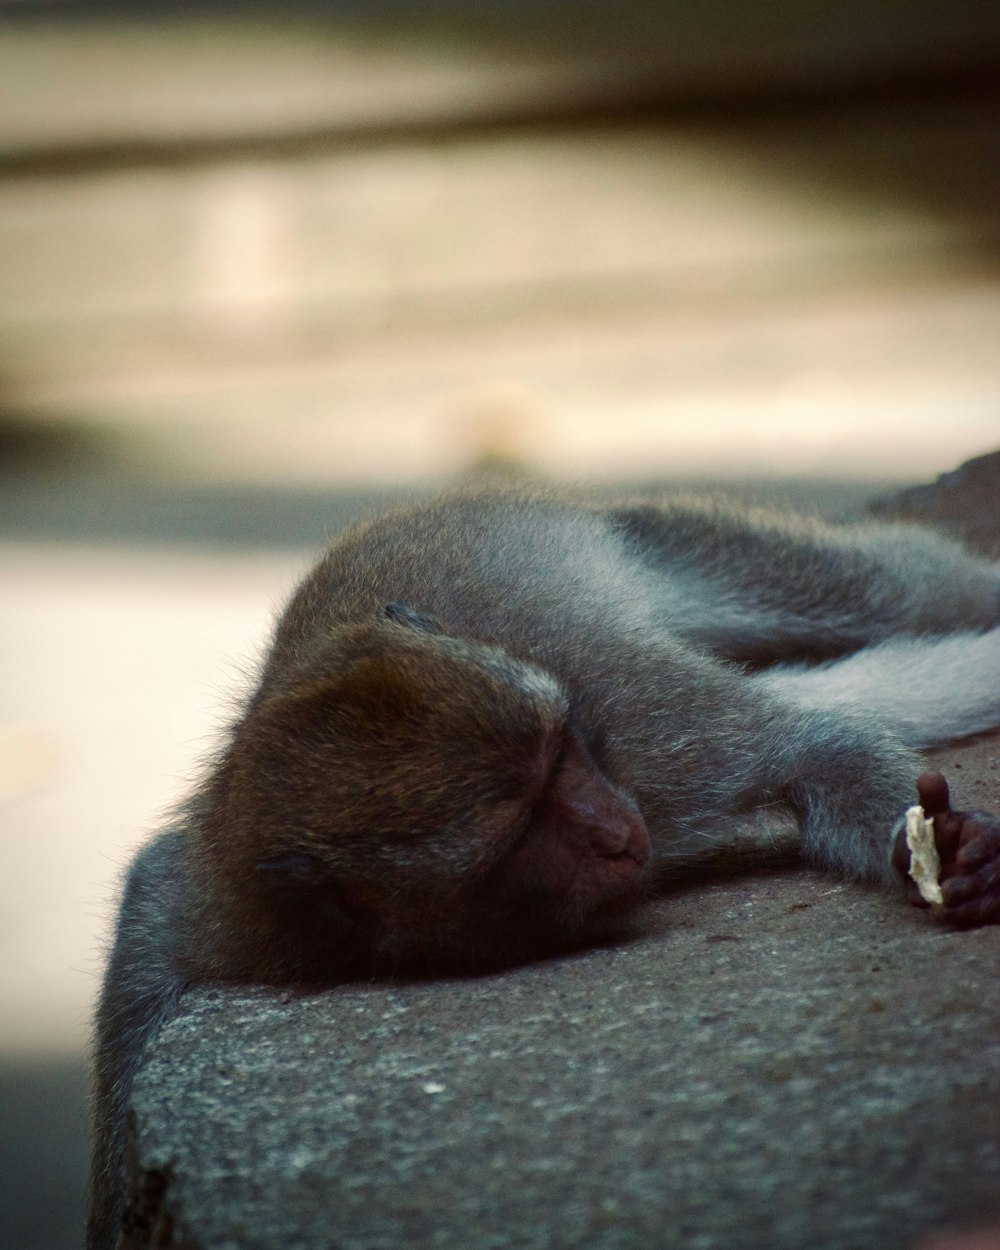 a small monkey is sleeping on a ledge